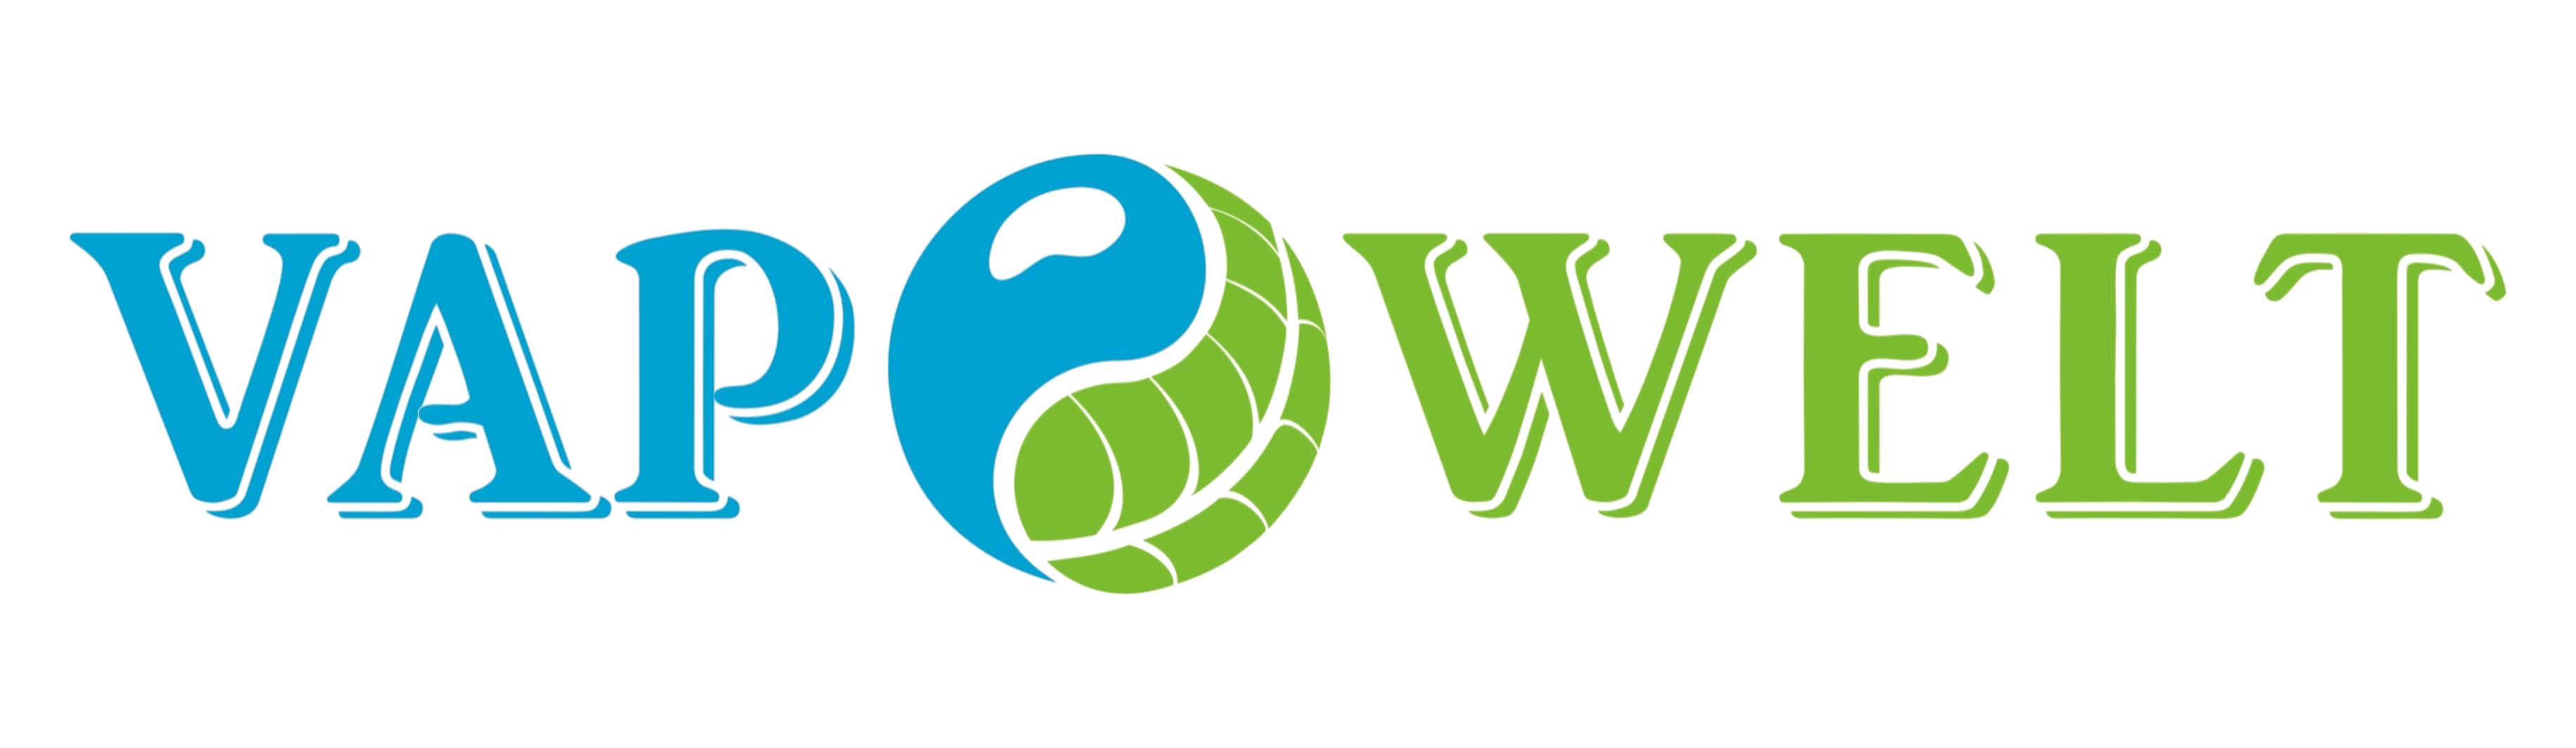 vapowelt_logo